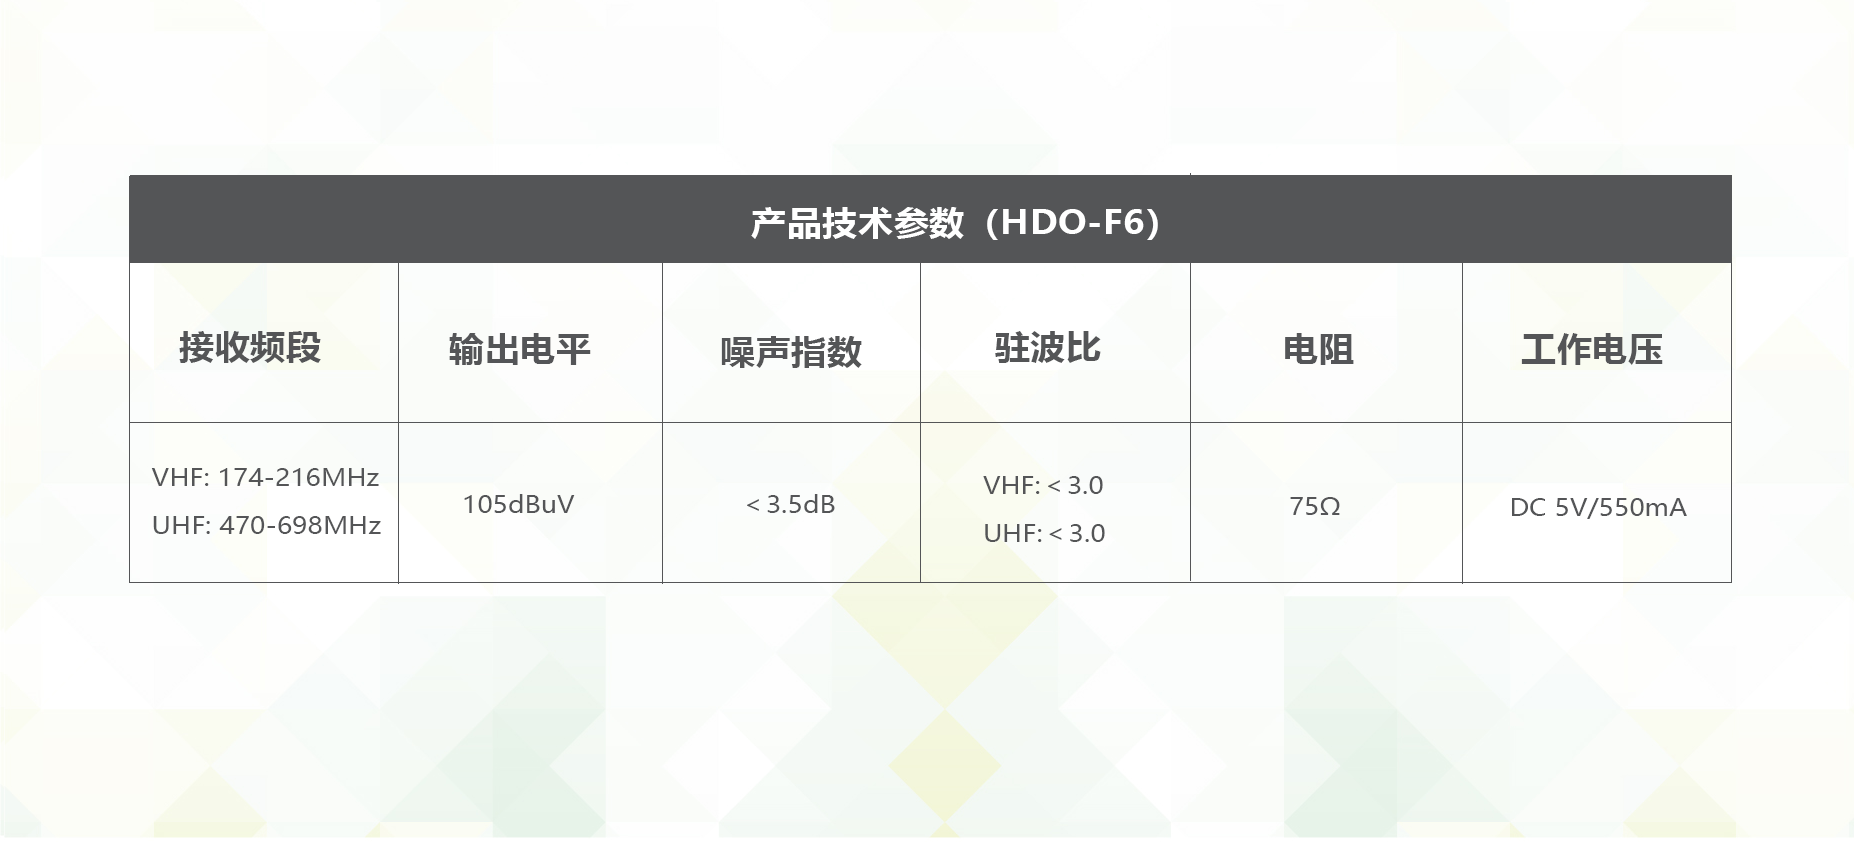 HDO-F6 TECH 中文.png